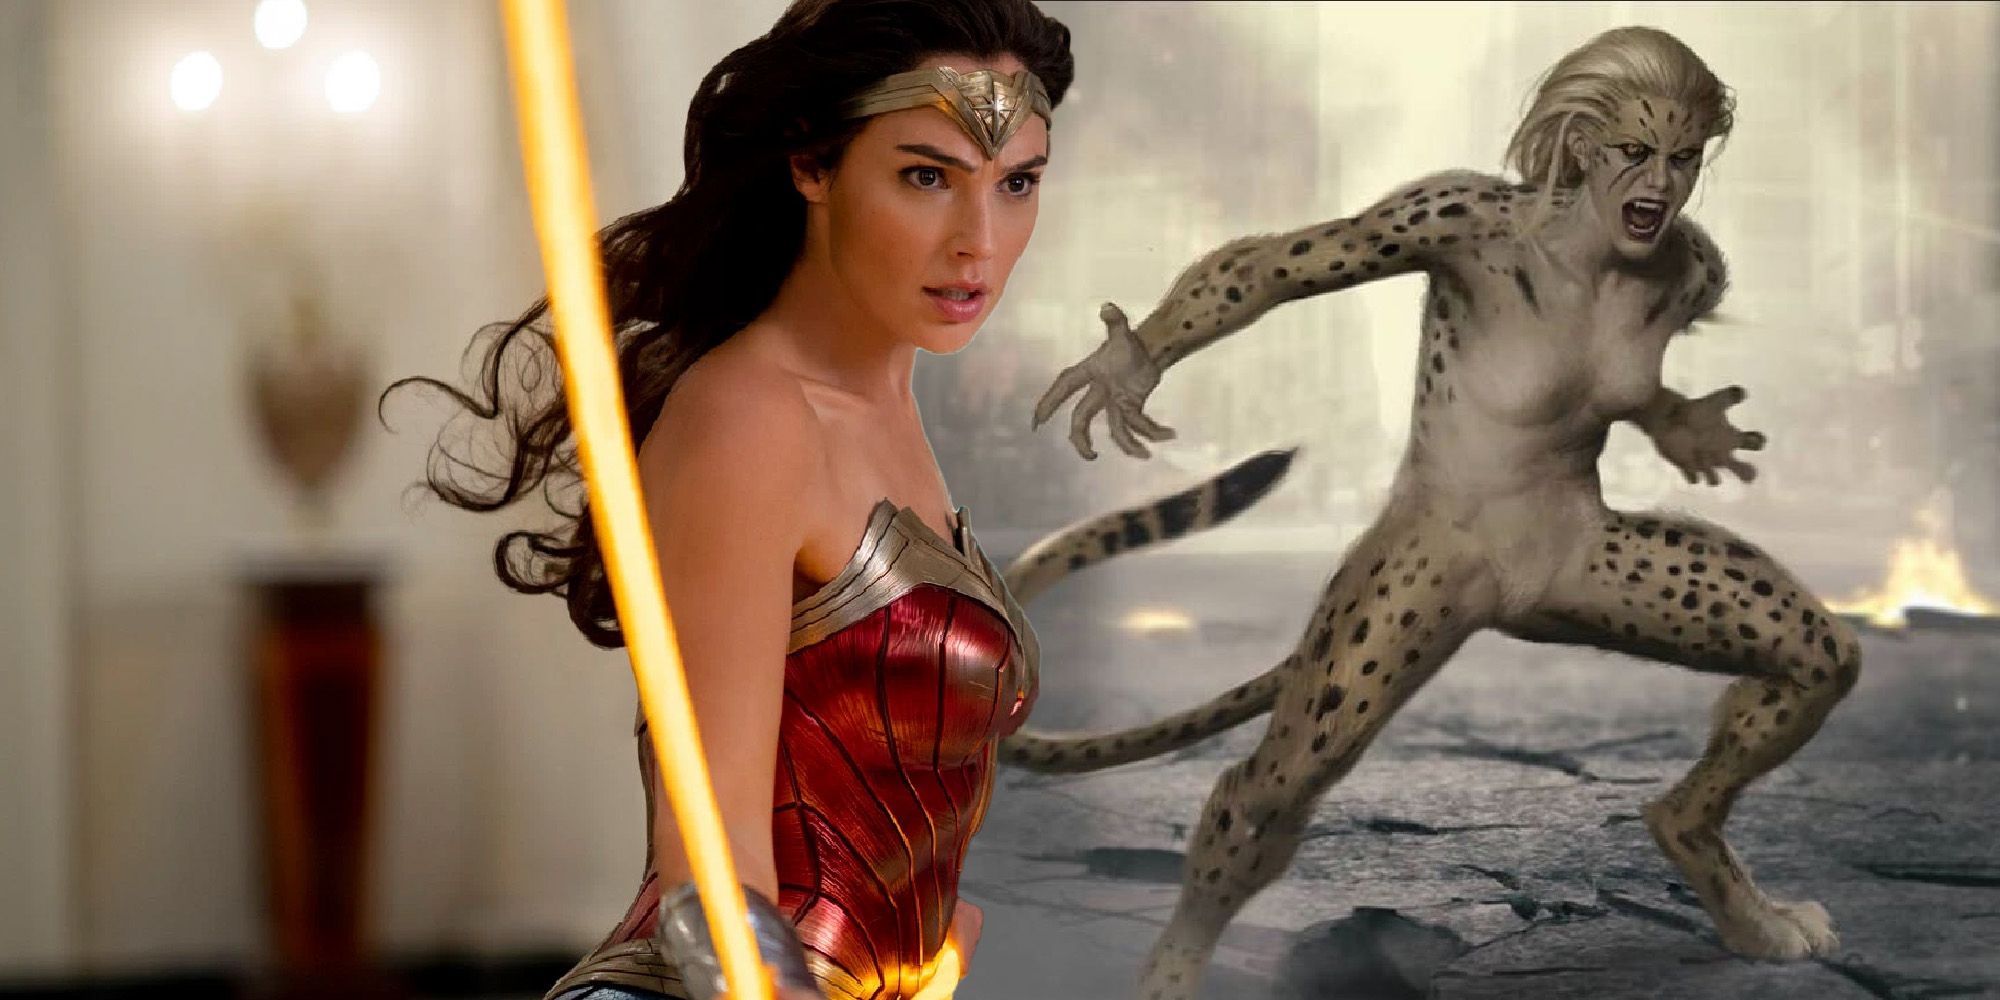 Wonder Woman 1984 Cheetah Looks Way Better in Her Full Reveal